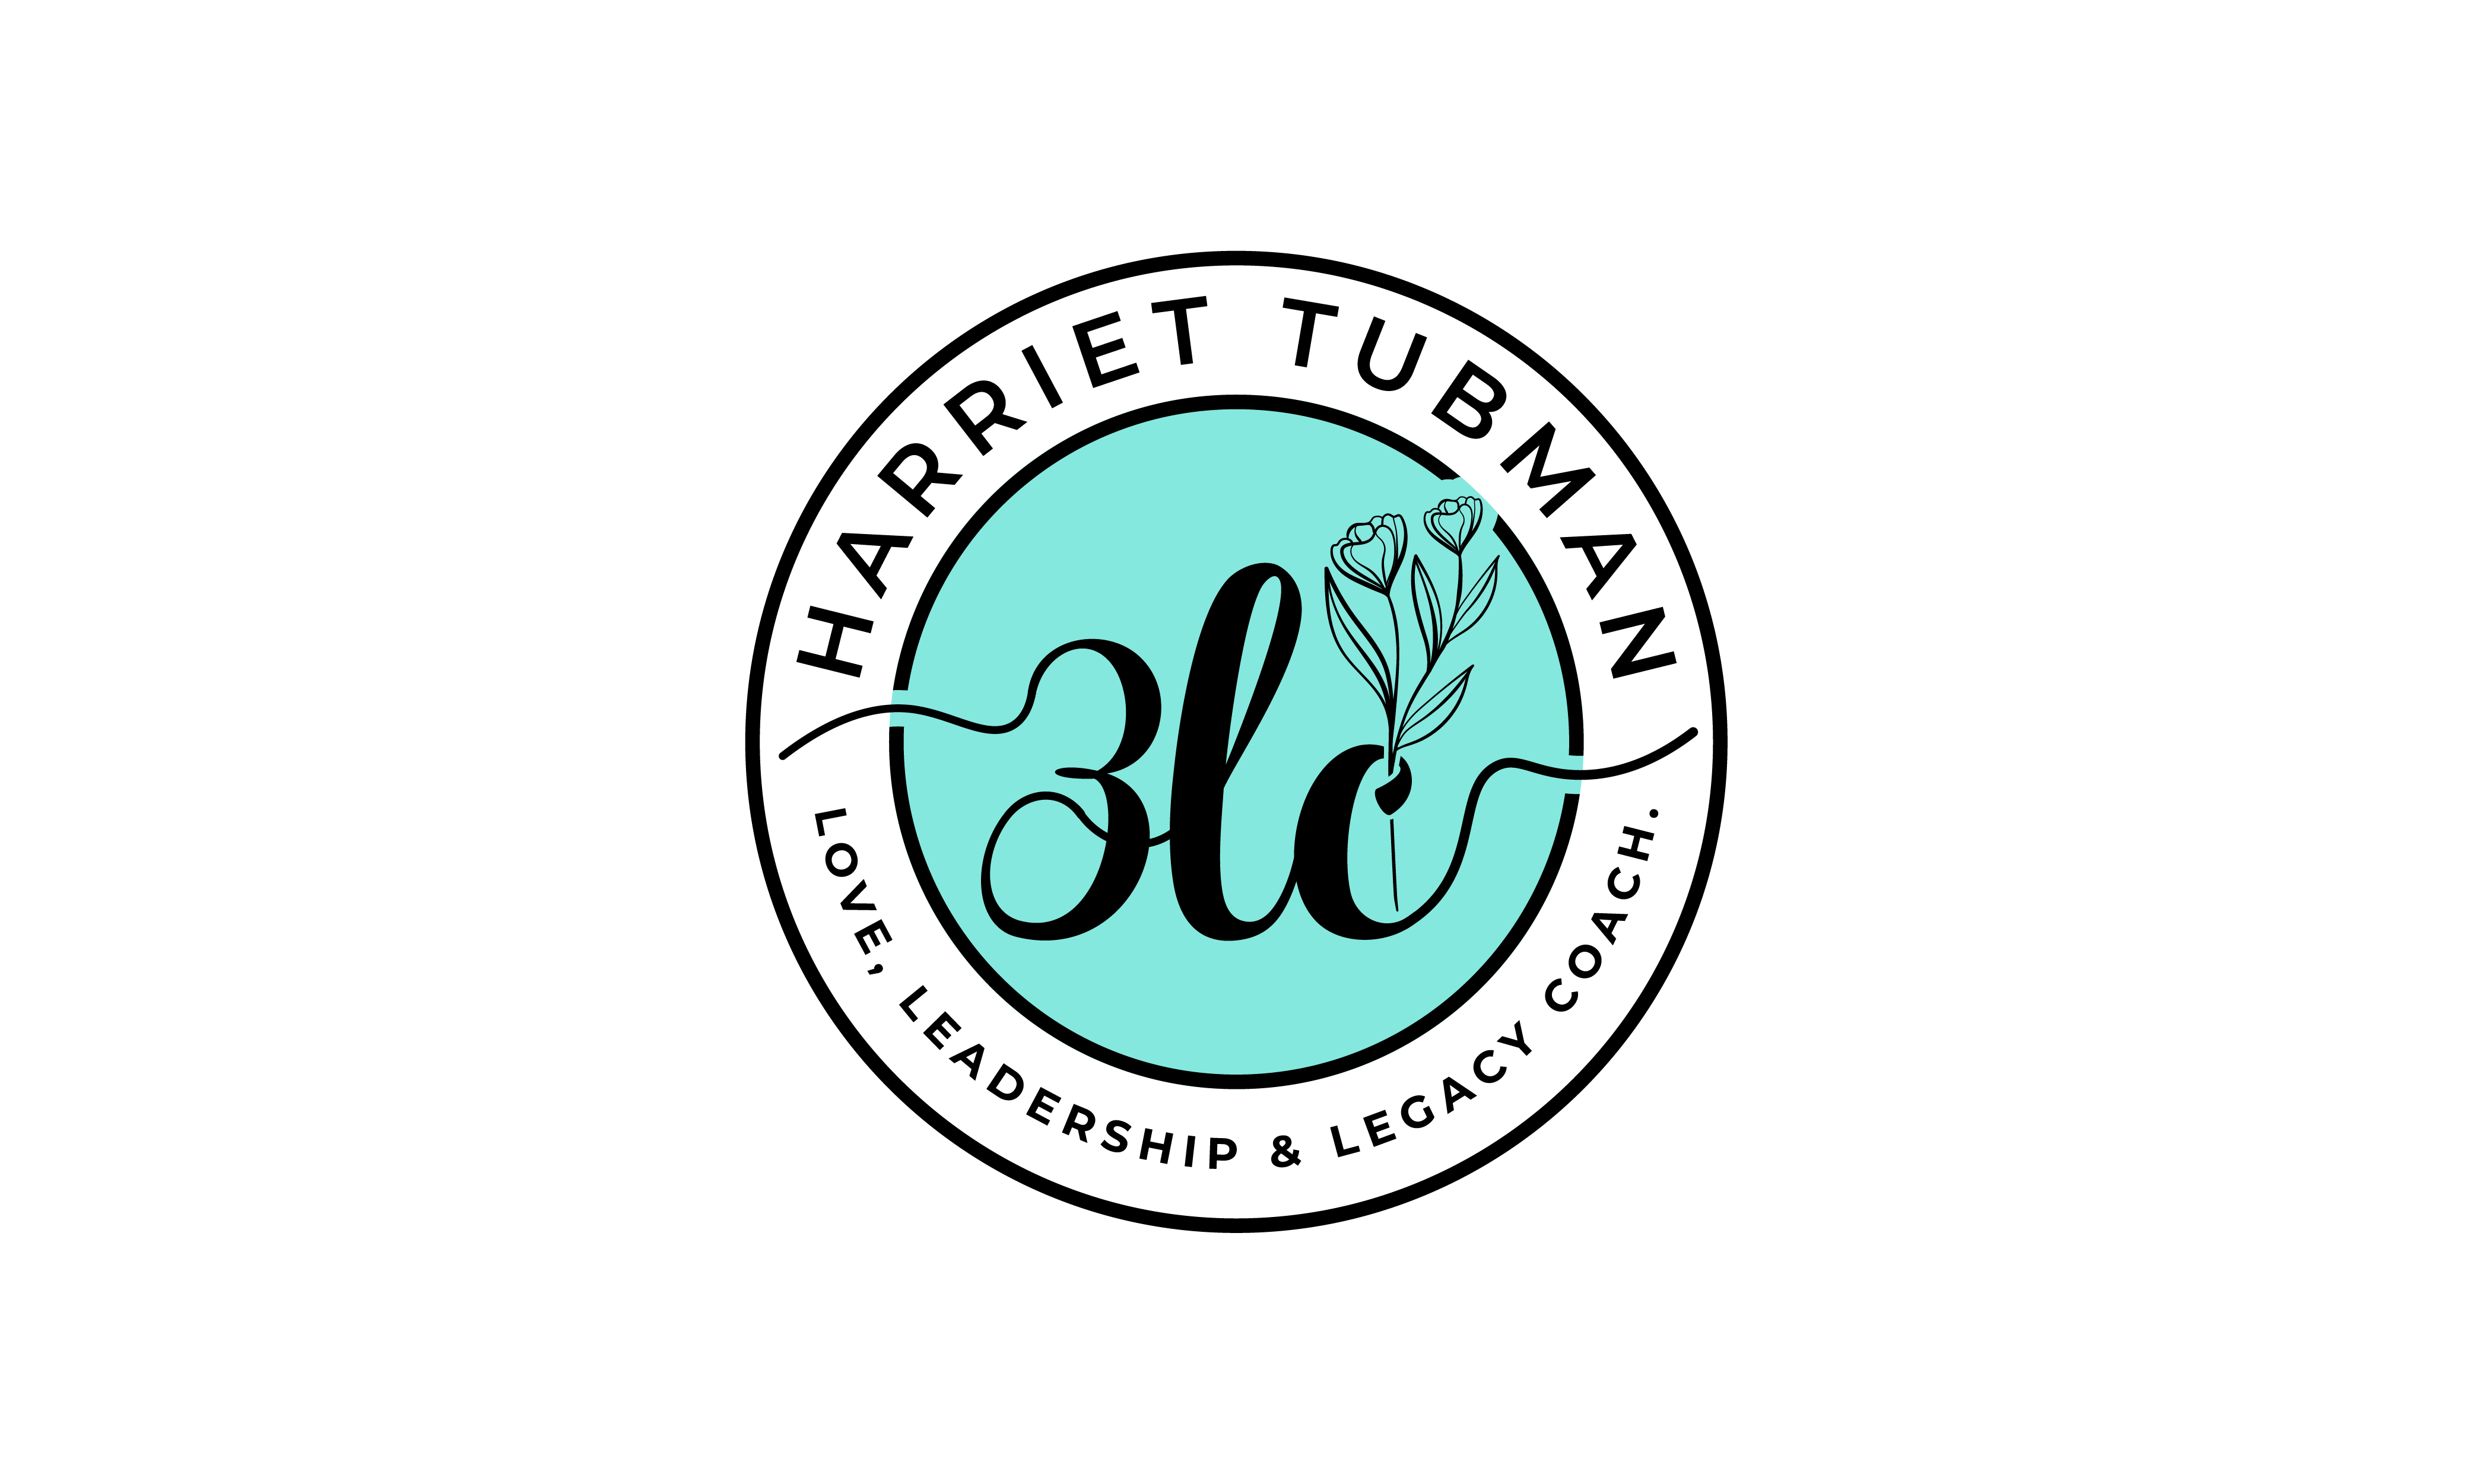 Harriet Tubman 3Lc logo